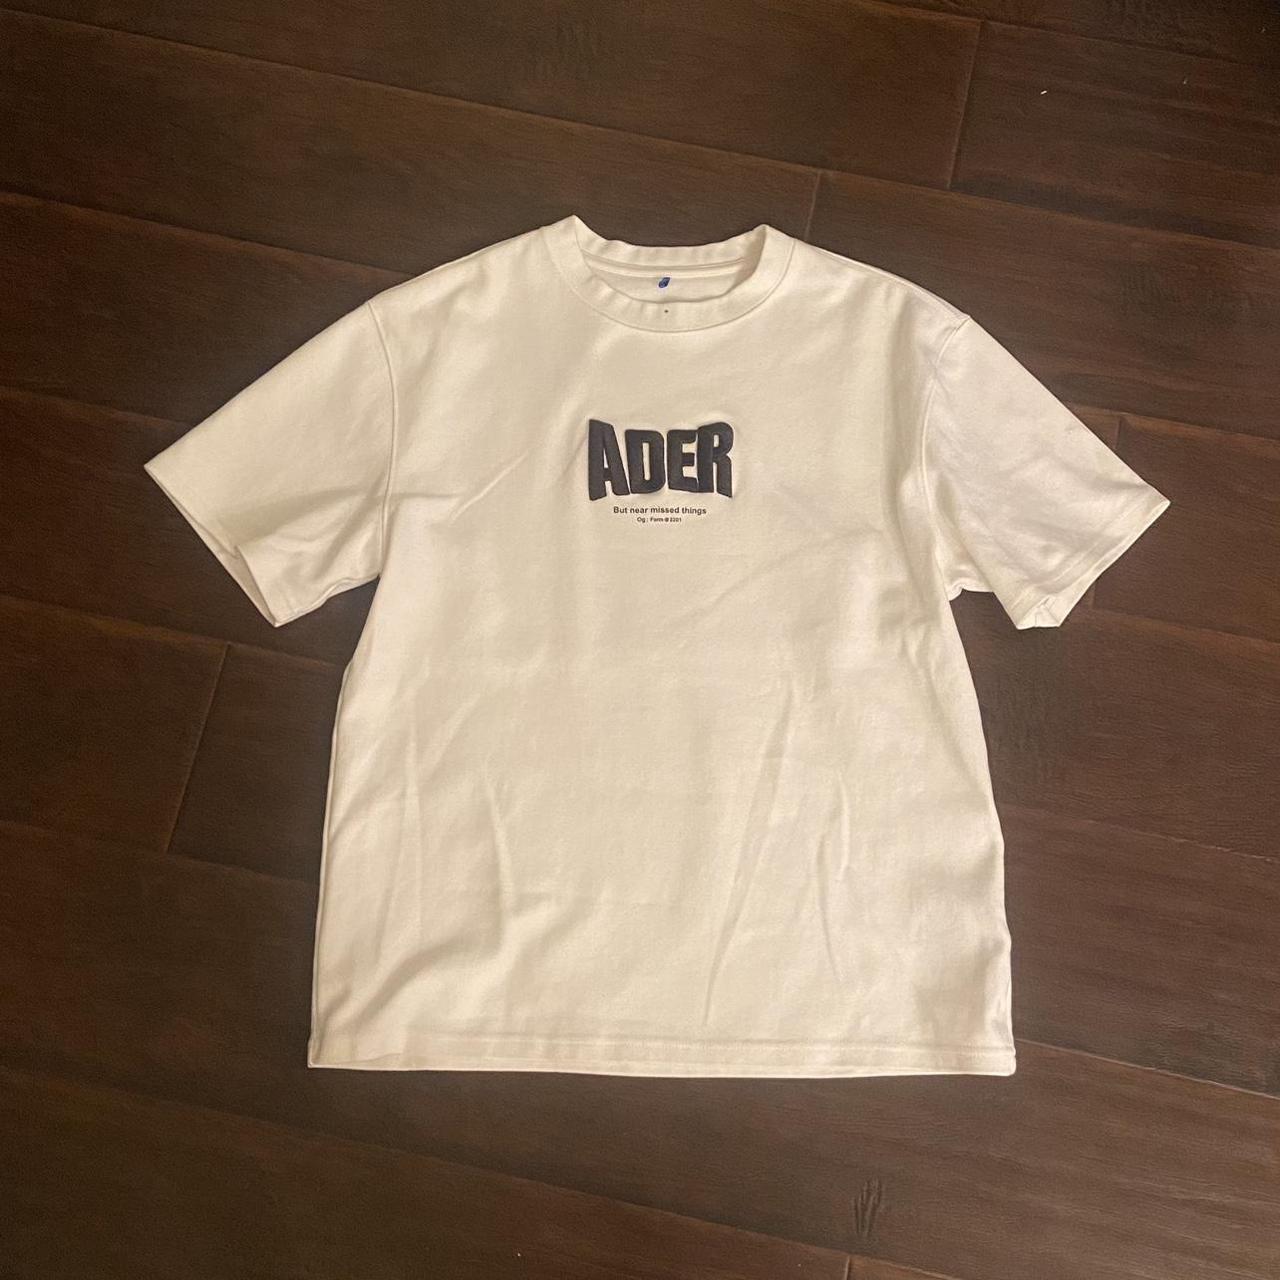 Ader Error Men's White and Cream T-shirt